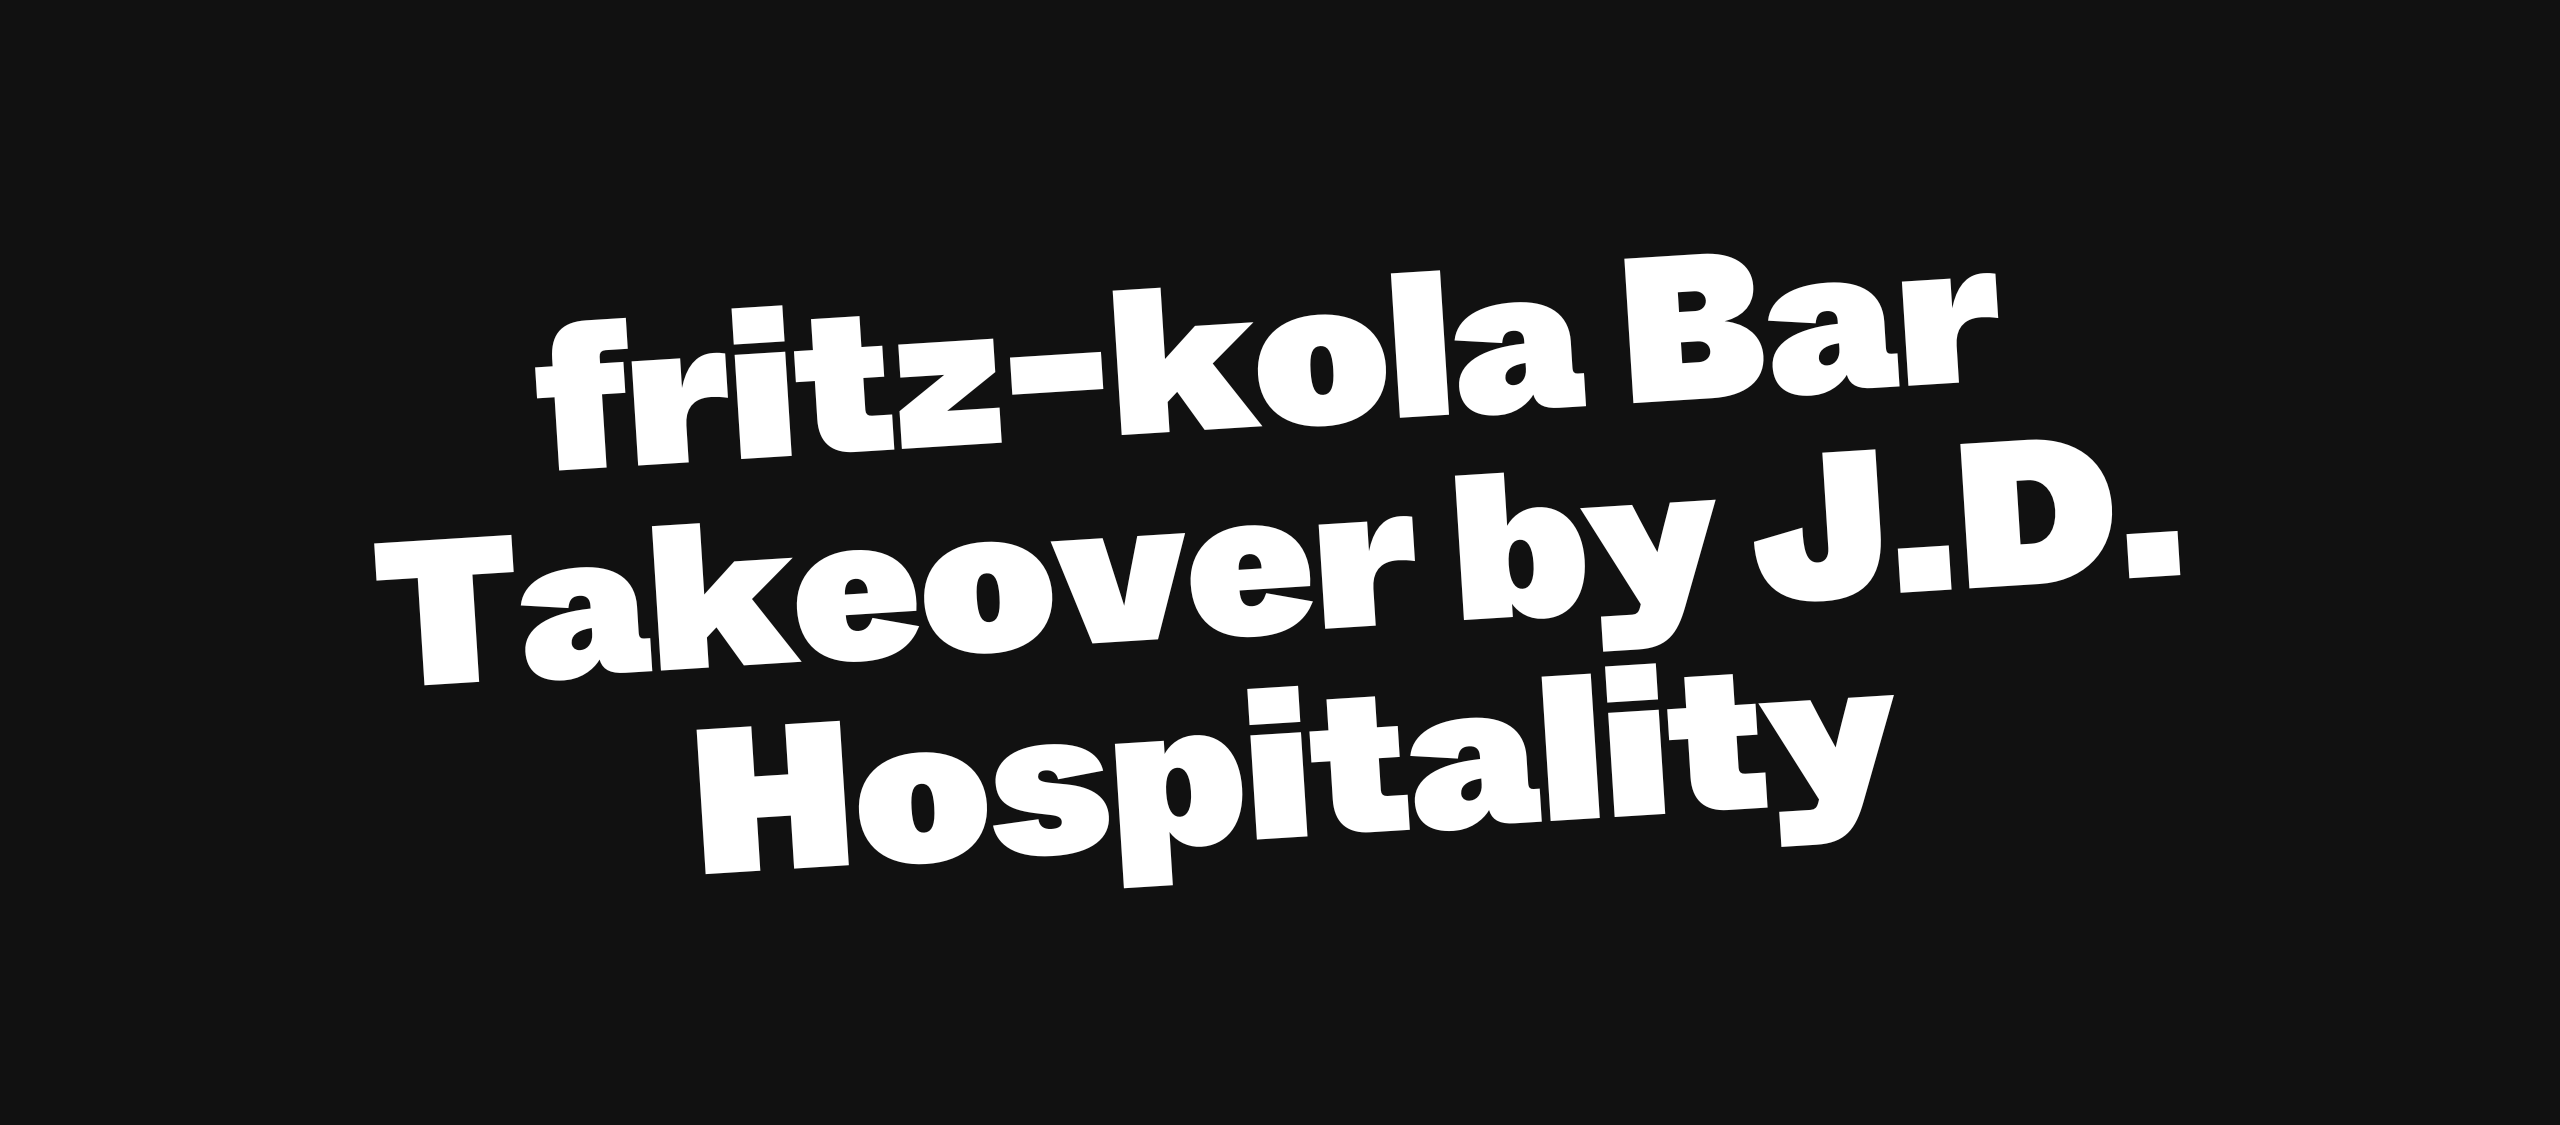 fritz-kola Bar Takeover by J.D. Hospitality